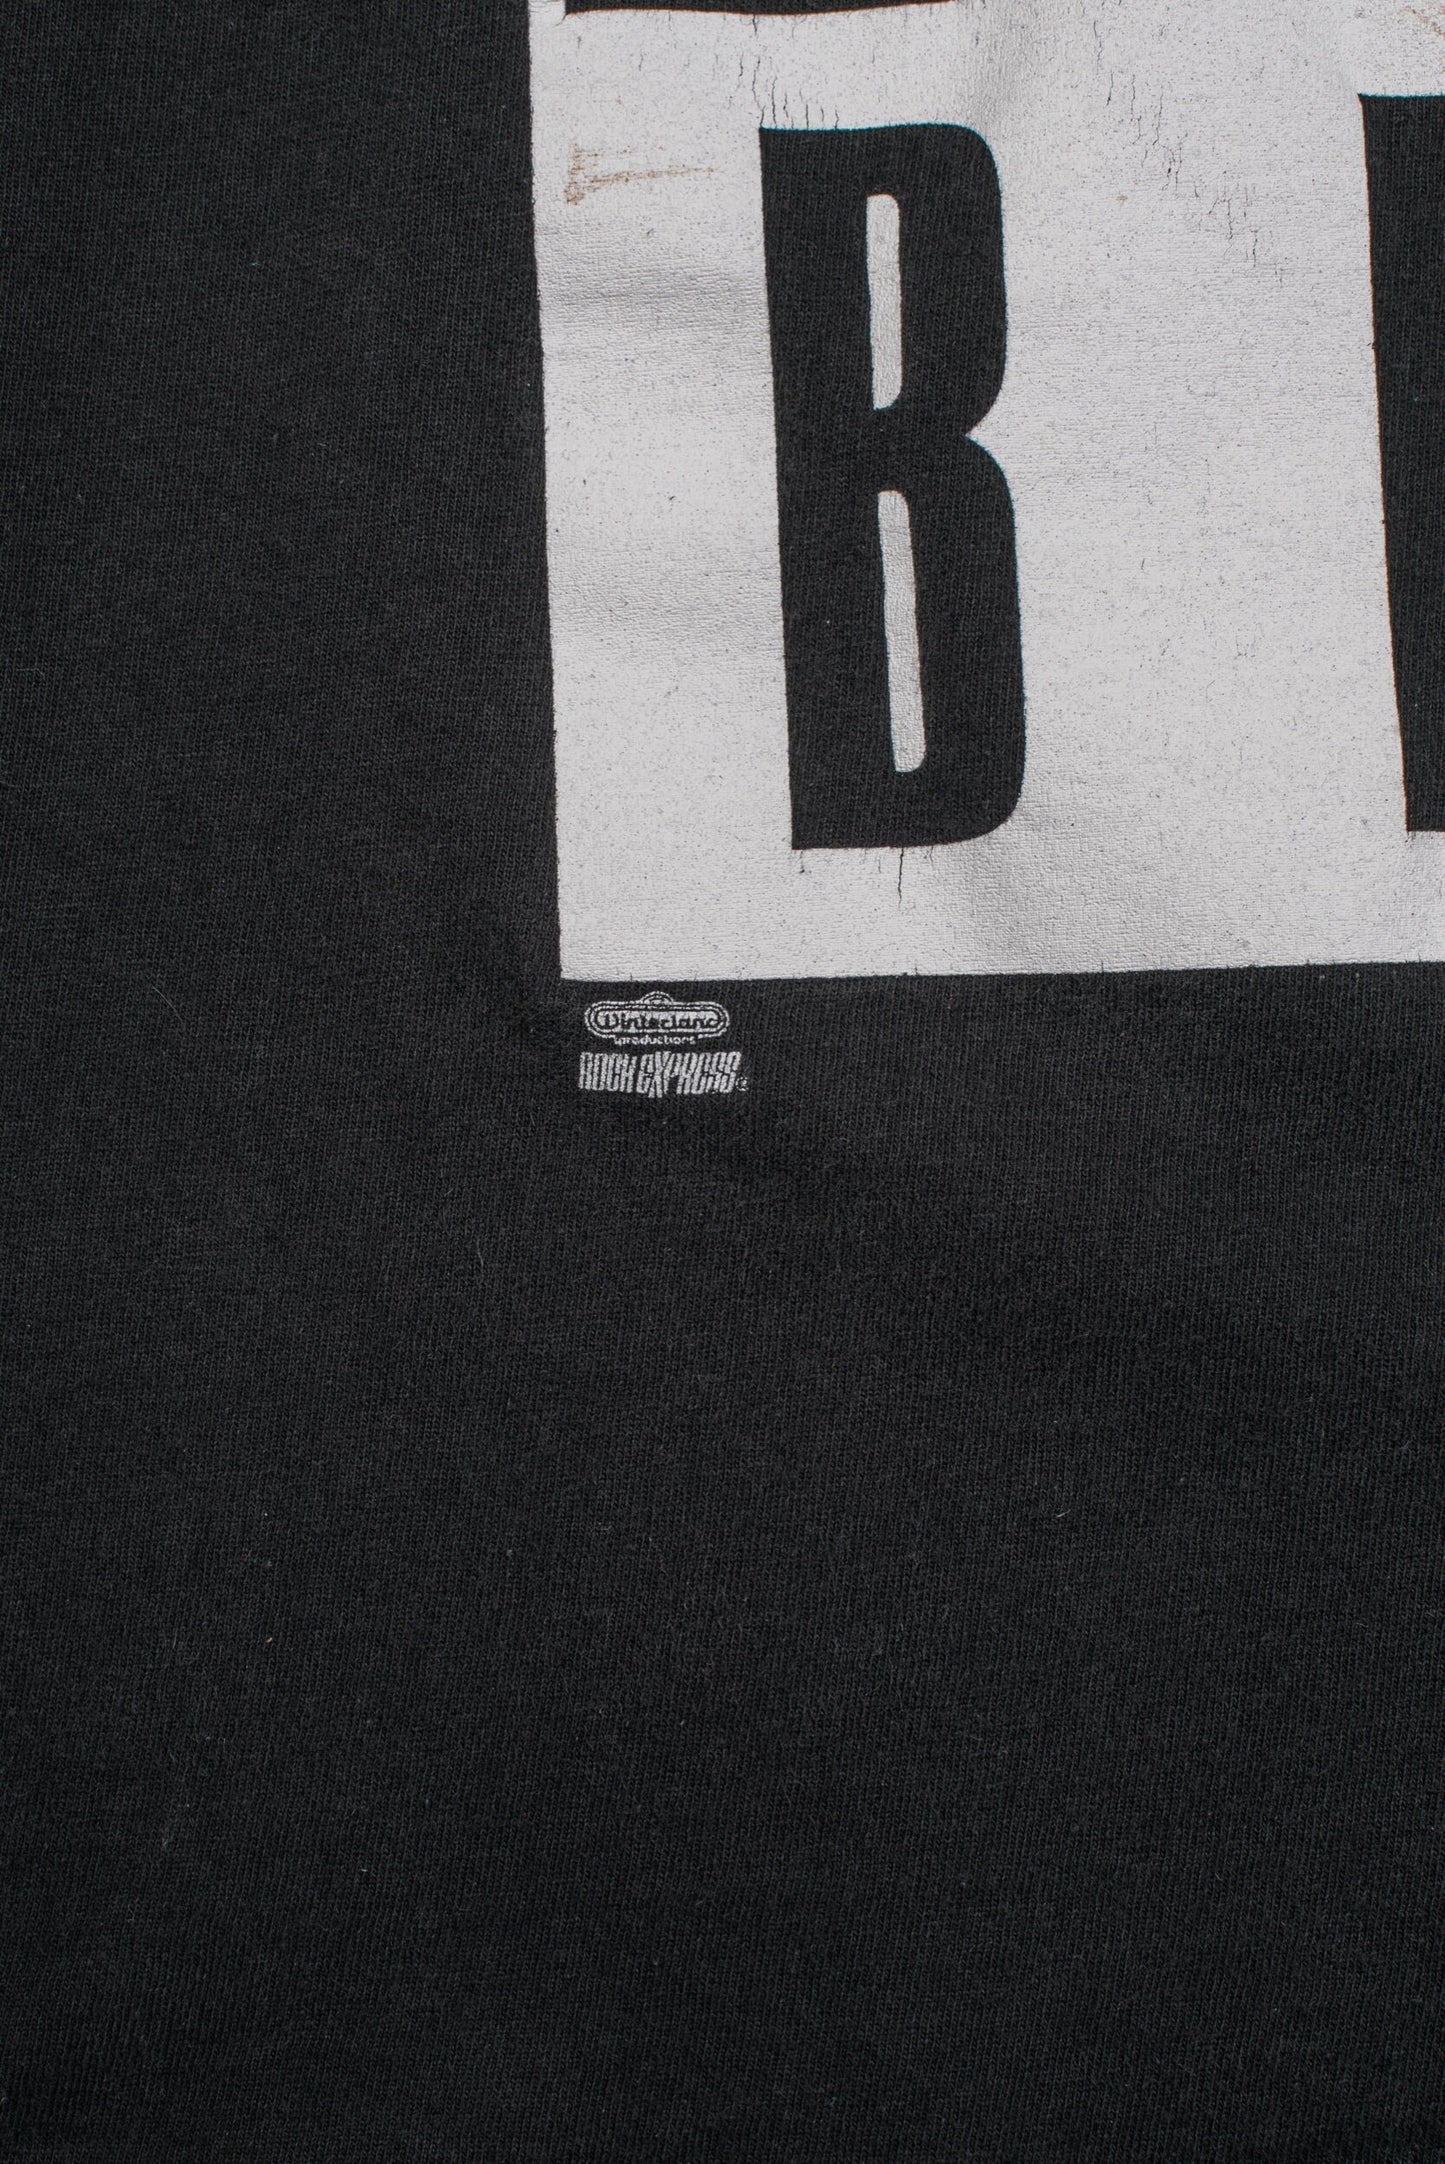 Vintage 1993 Bobby Brown Humpin’ Around The World Tour T-Shirt